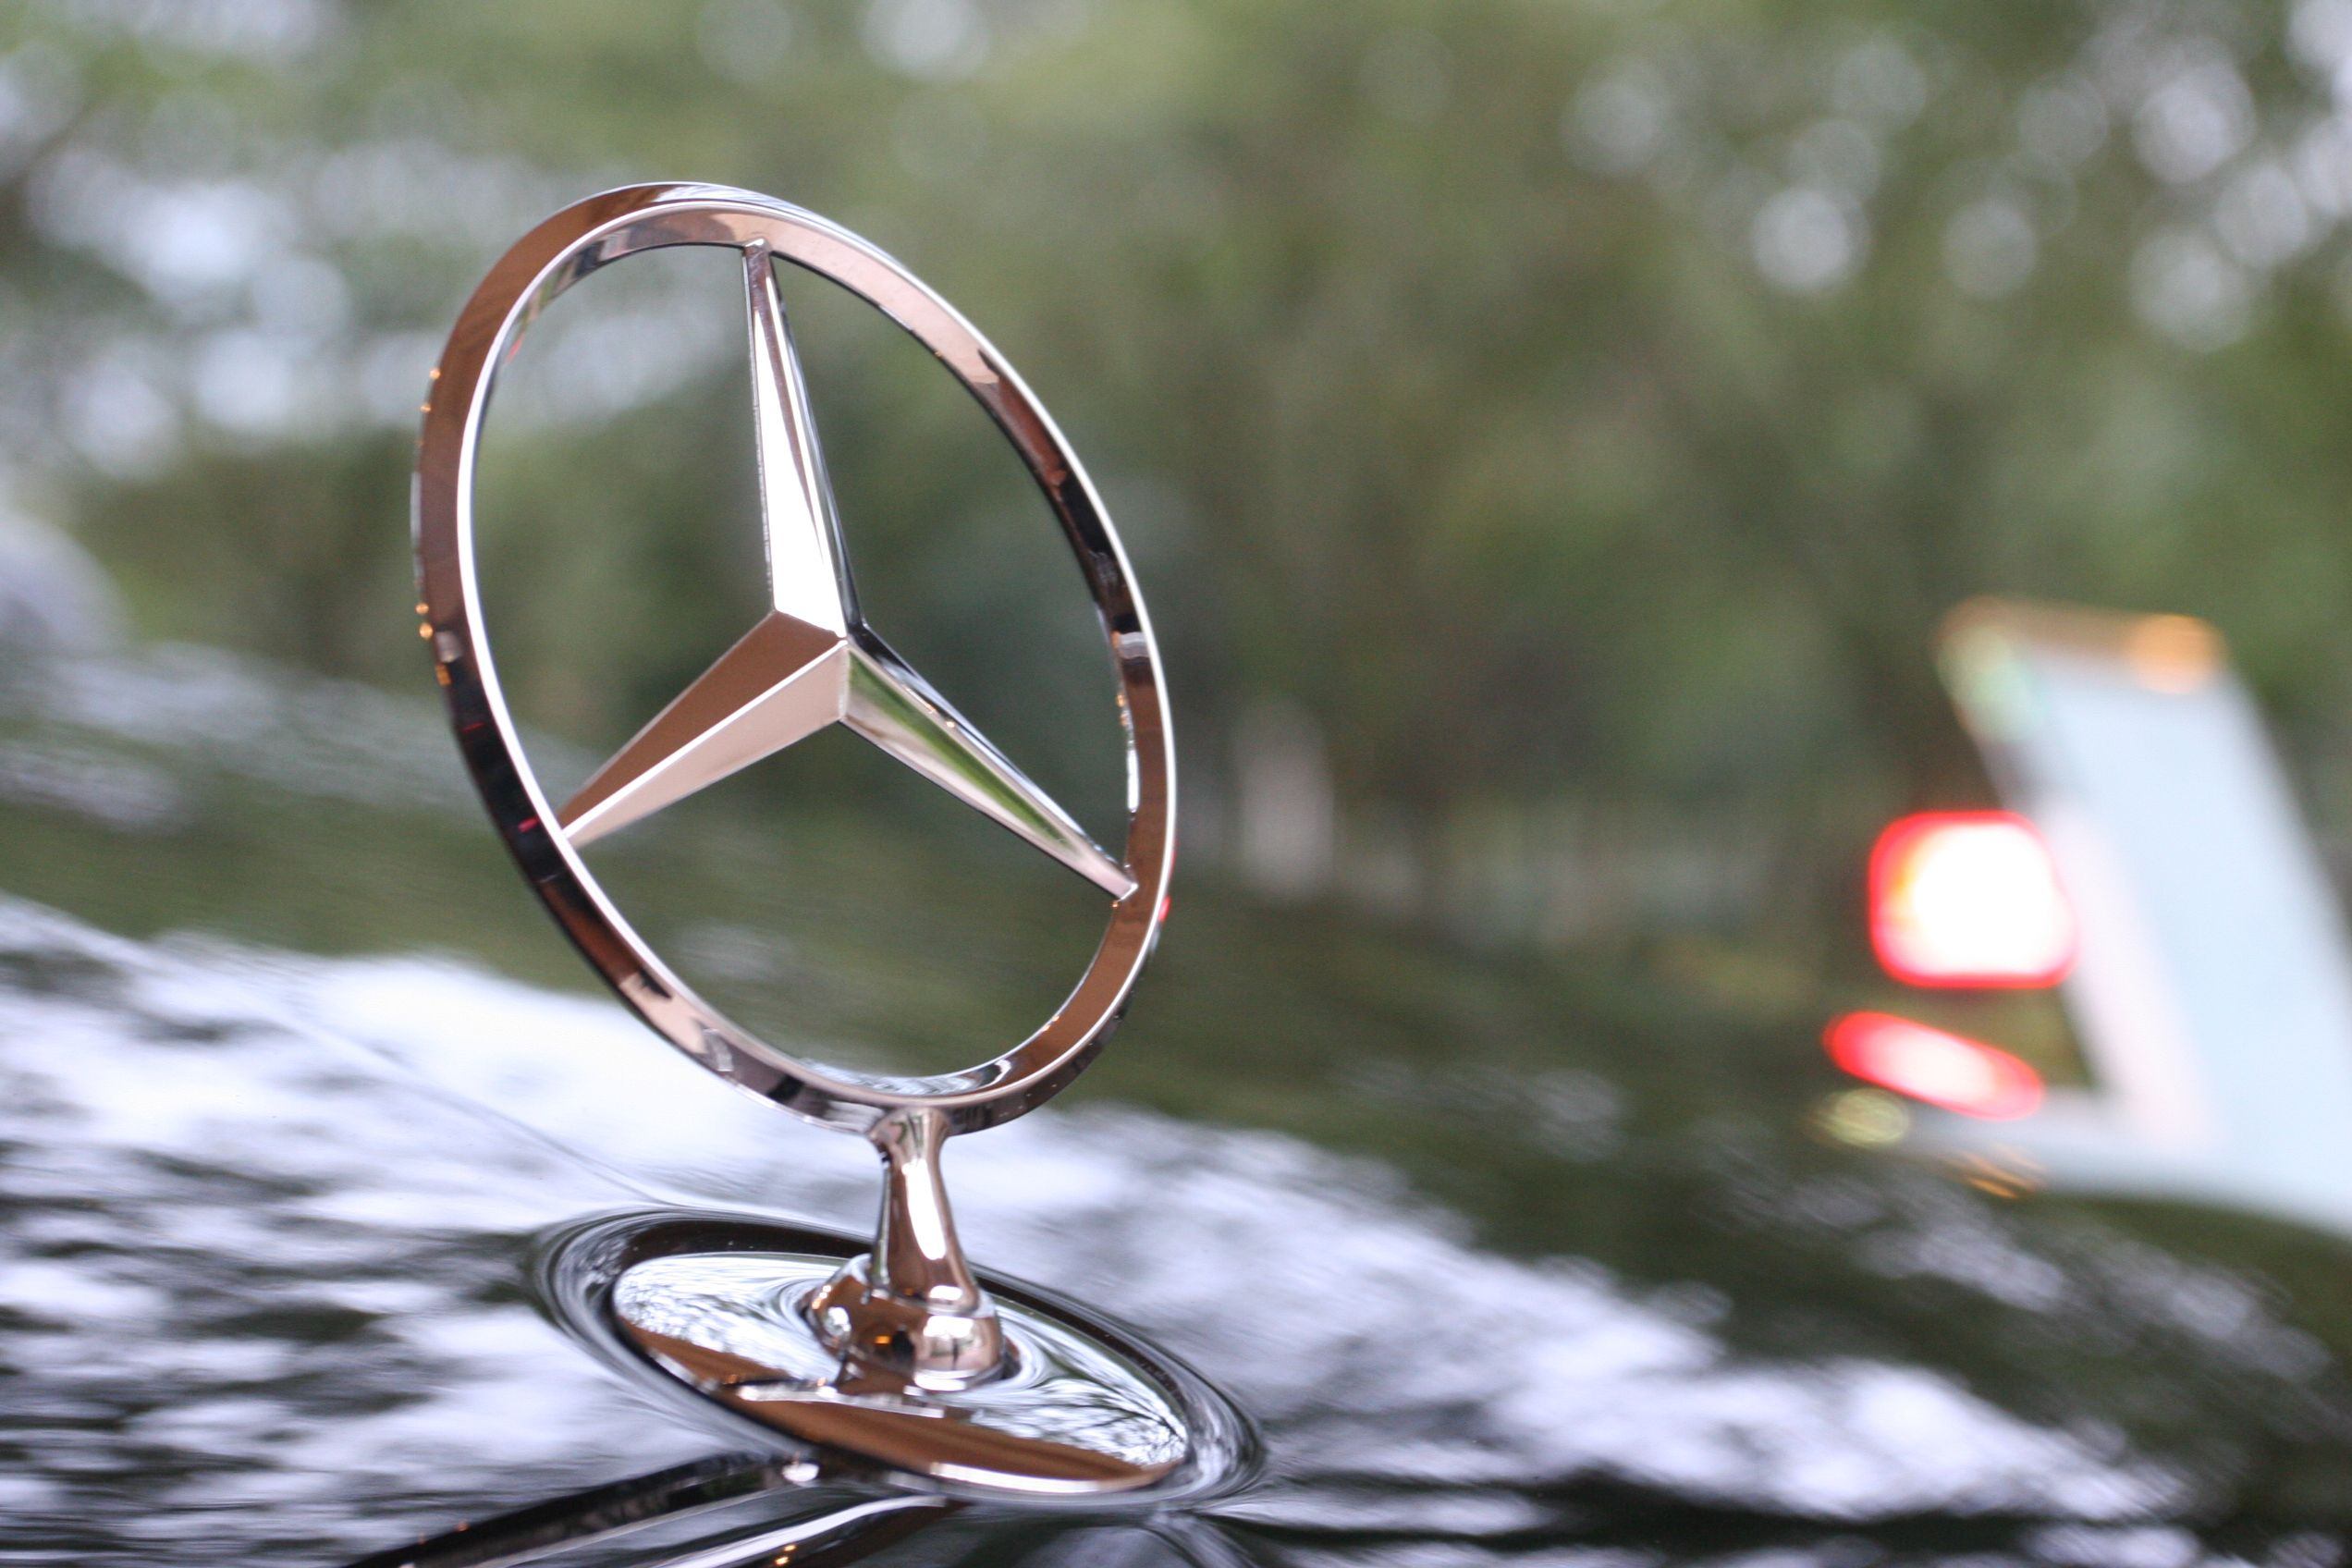 Mercedes Wallpaper Pictures | Download Free Images on Unsplash